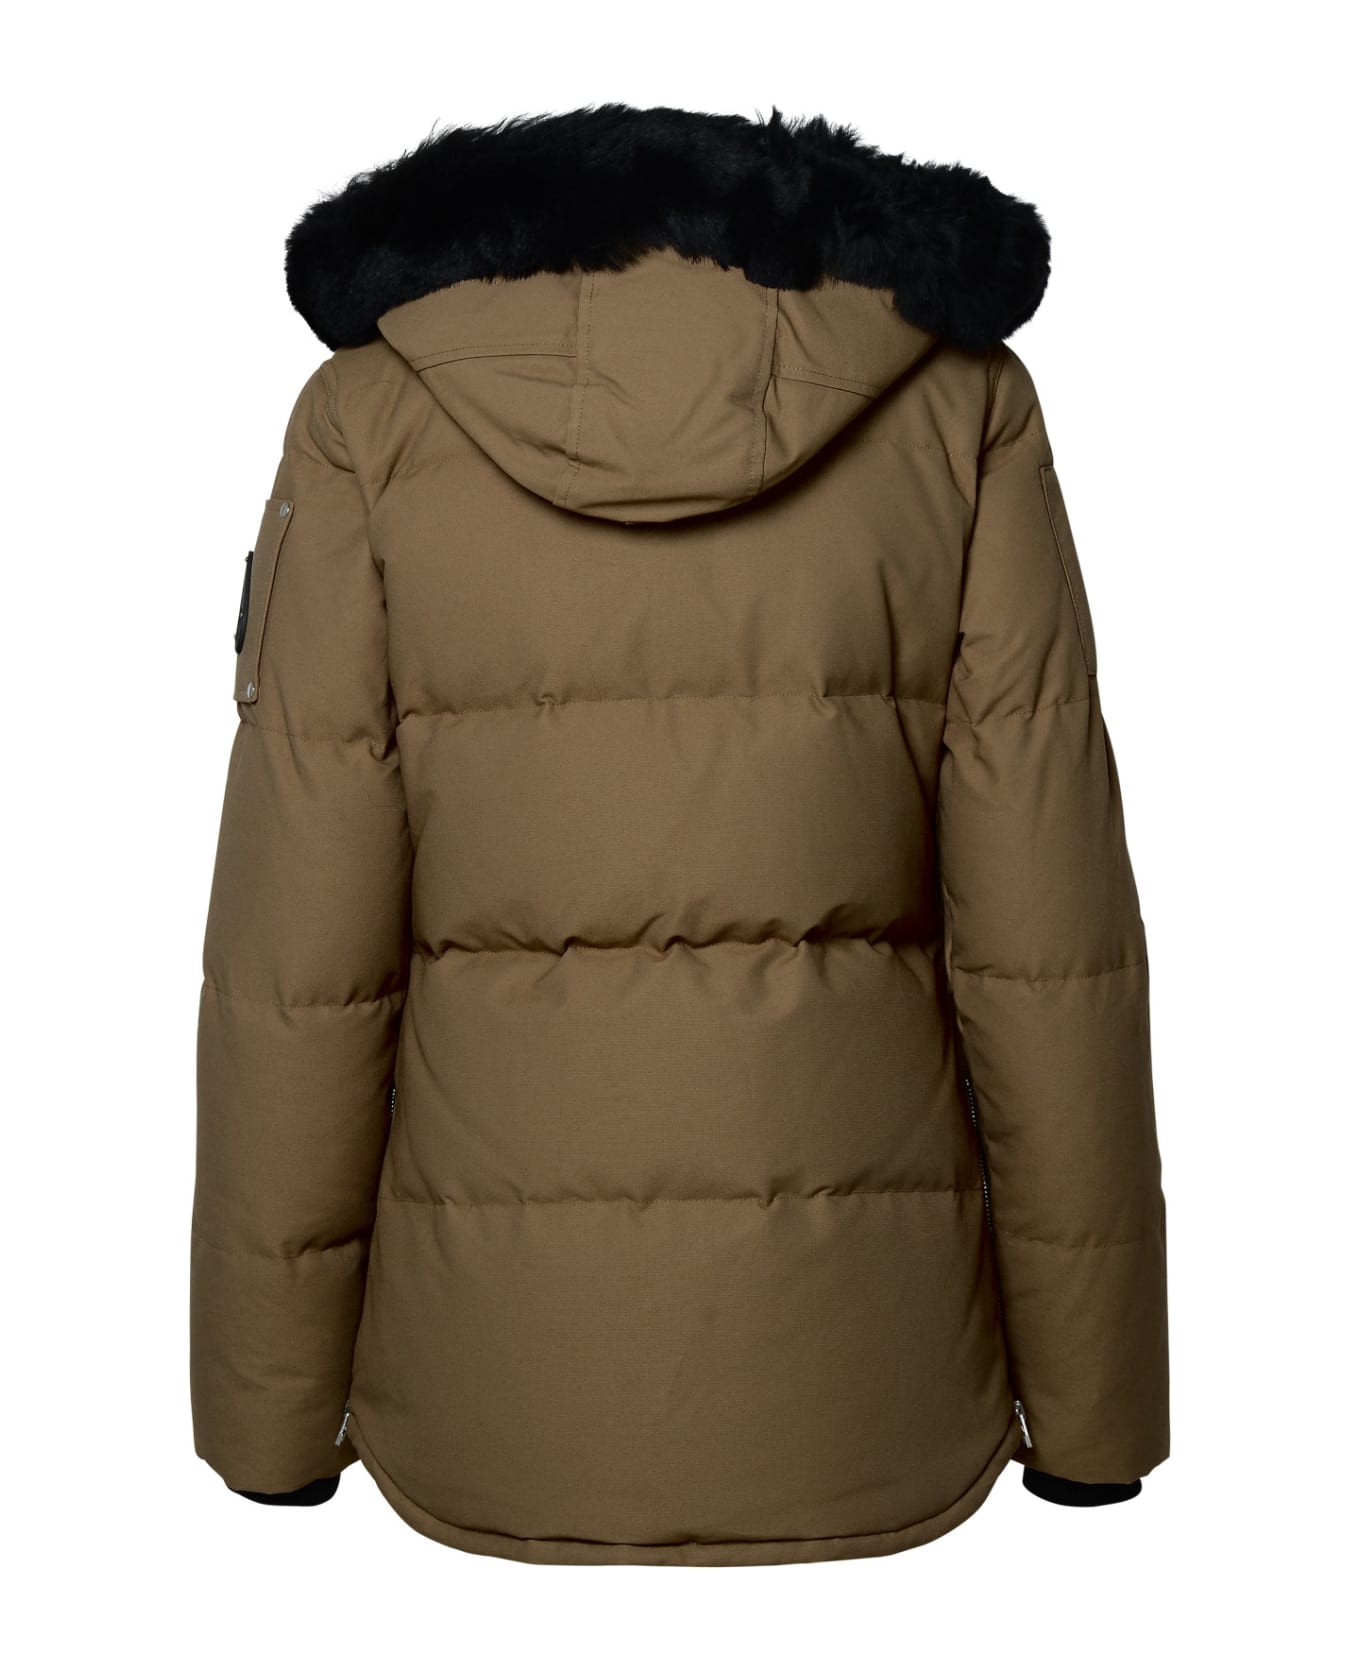 Moose Knuckles 3q Jacket In Brown Cotton Blend - Brown